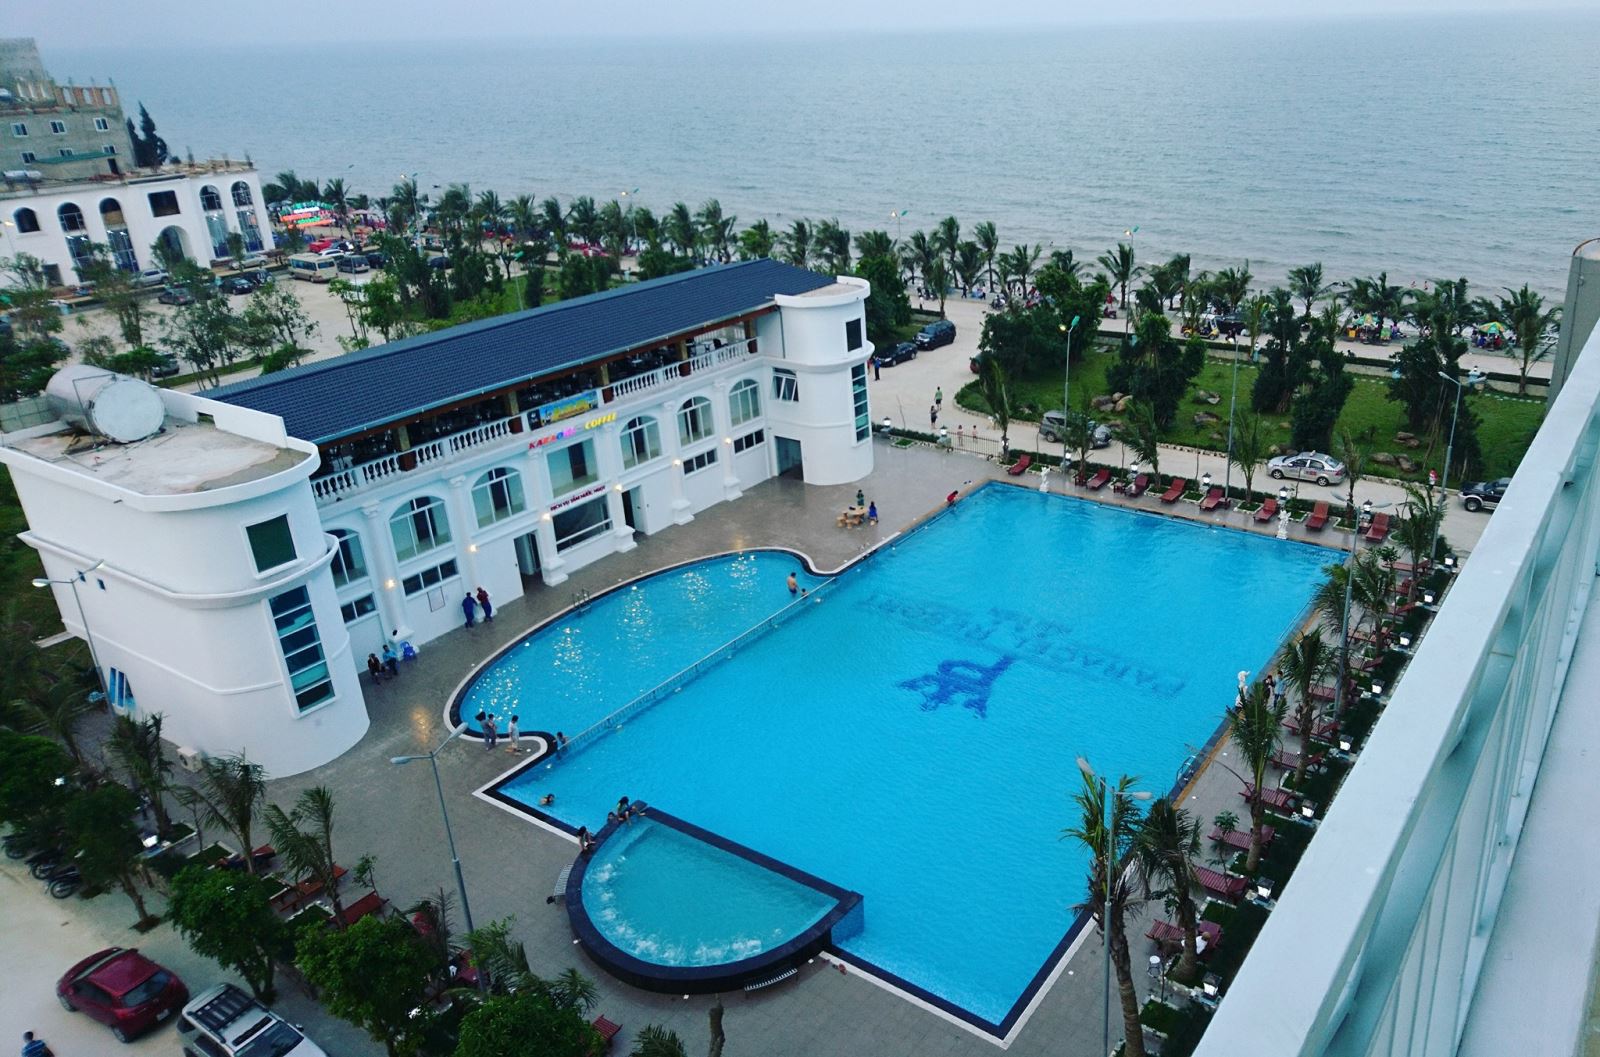 Bể bơi tại Paracel Resort Hải Tiến